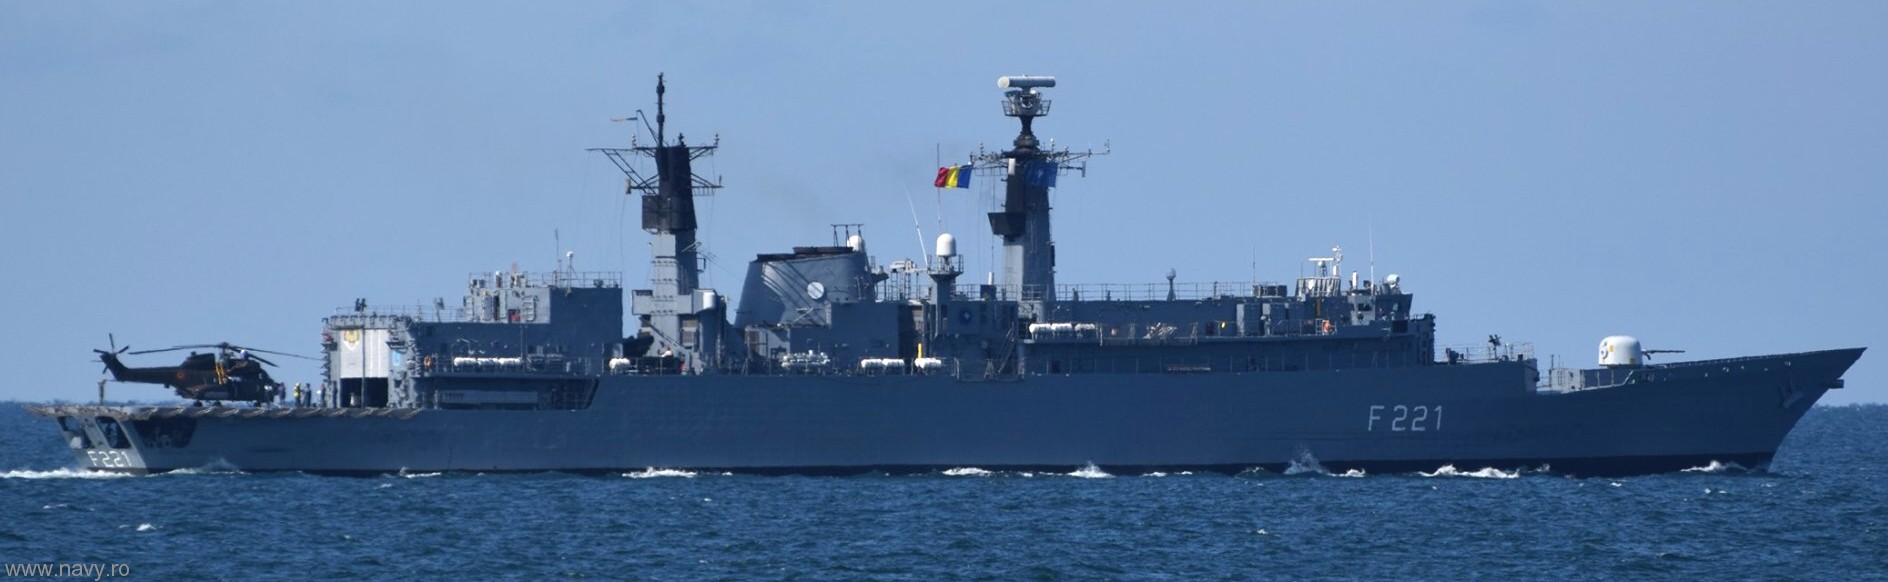 f-221 ros regele ferdinand frigate romanian navy type 22 broadsword class 78